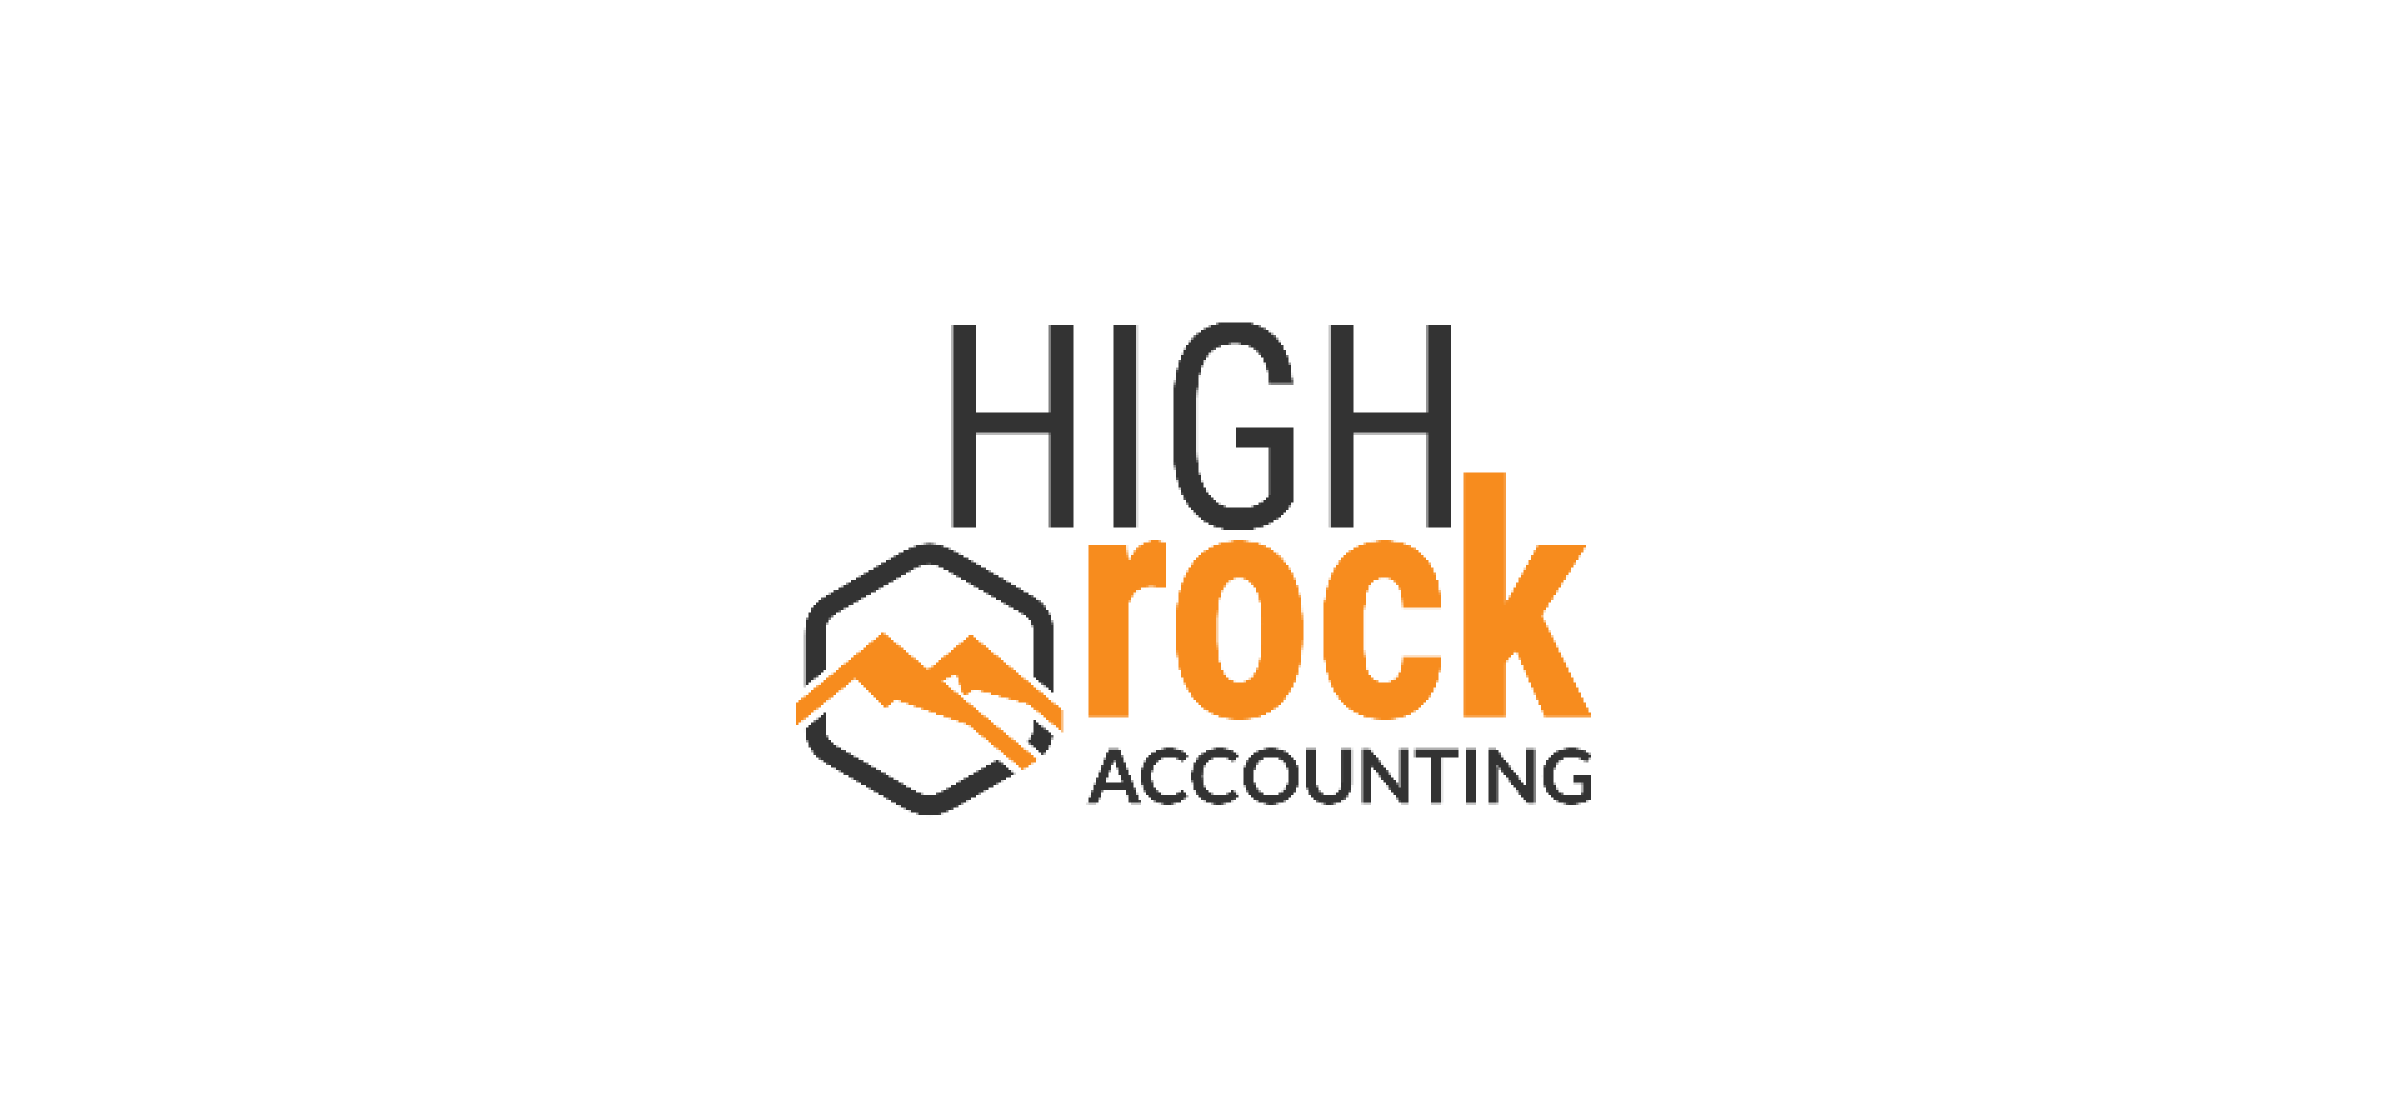 The High Rock Accounting logo